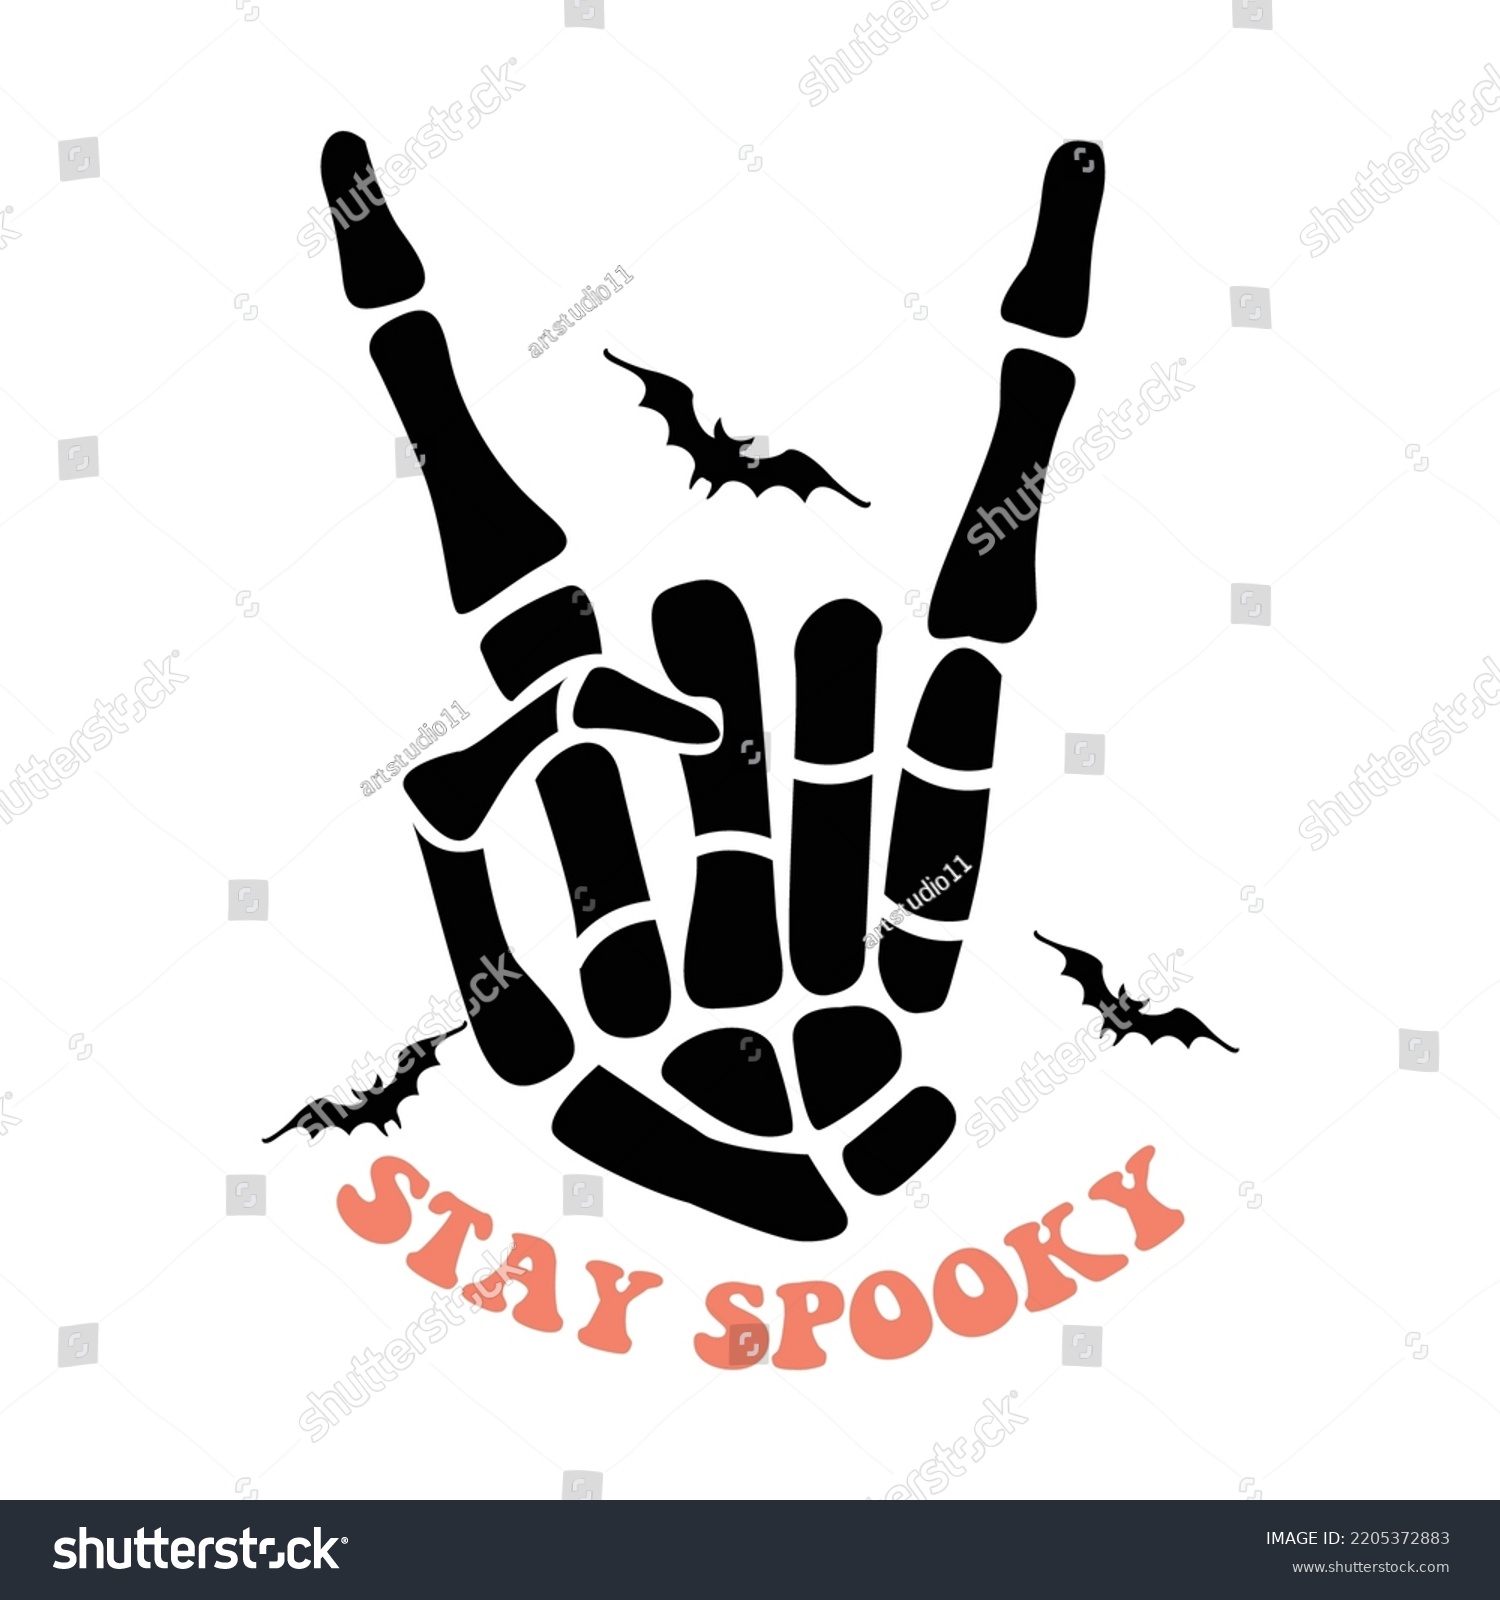 SVG of stay spooky, halloween, halloween svg, svg design, halloween t shirt, t shirt design, pumpkin svg, spooky svg, ghost svg